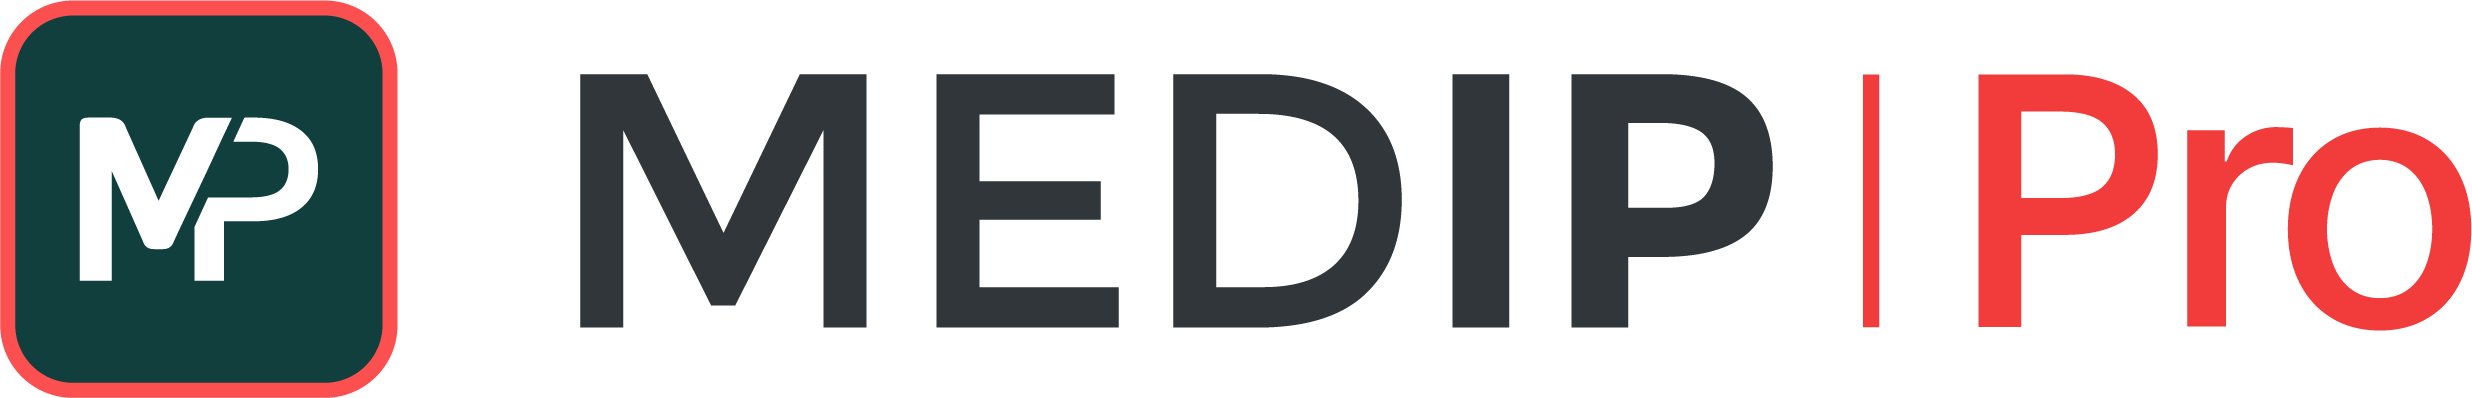 MEDIP Pro logo